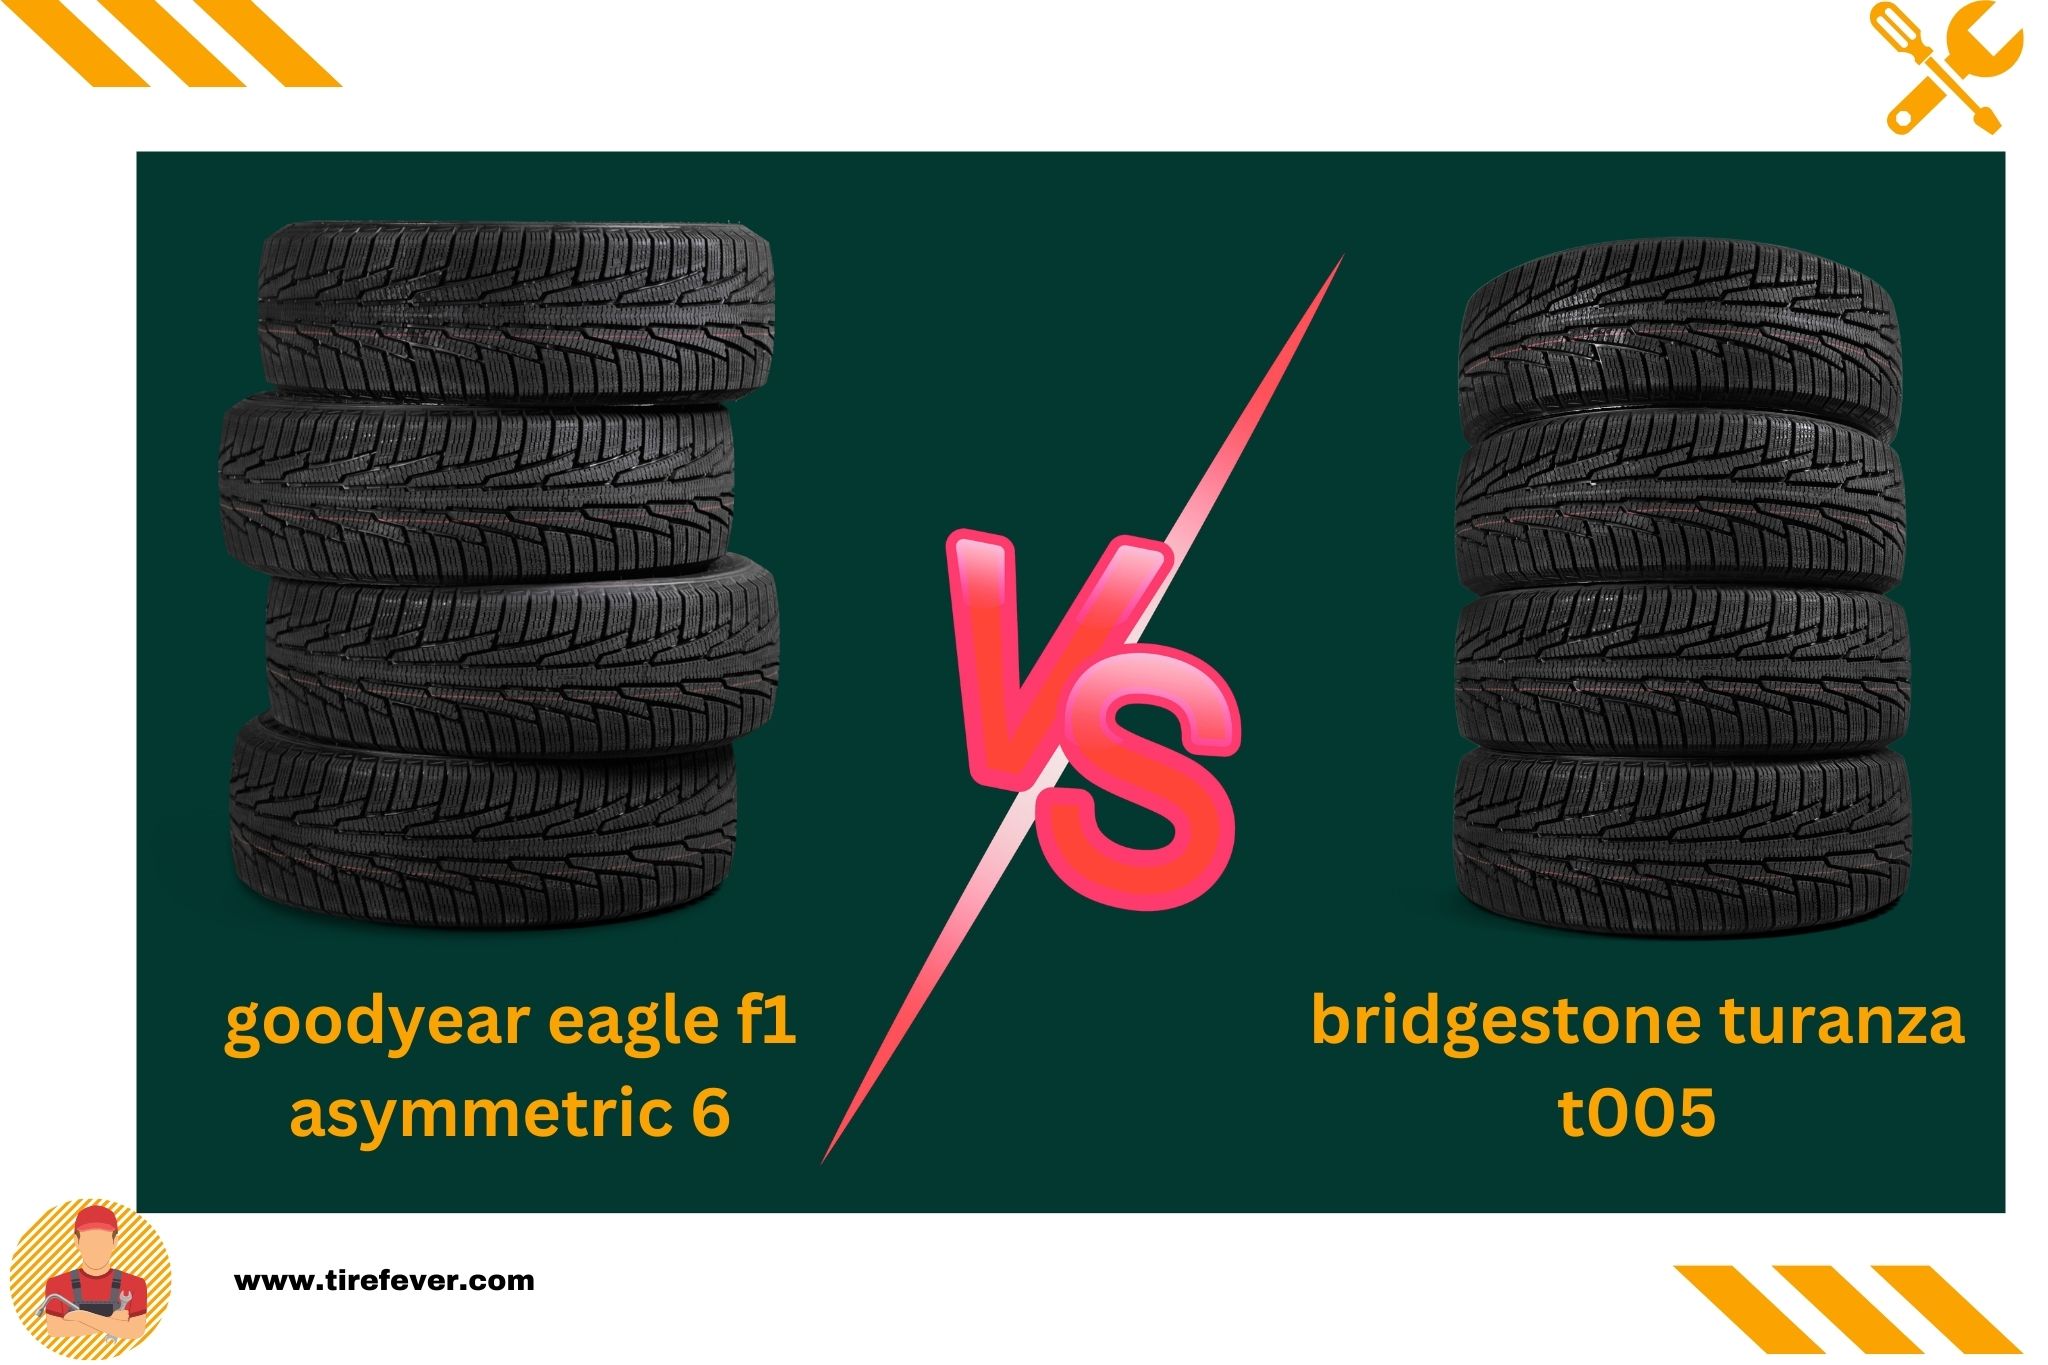 goodyear eagle f1 asymmetric 6 vs bridgestone turanza t005